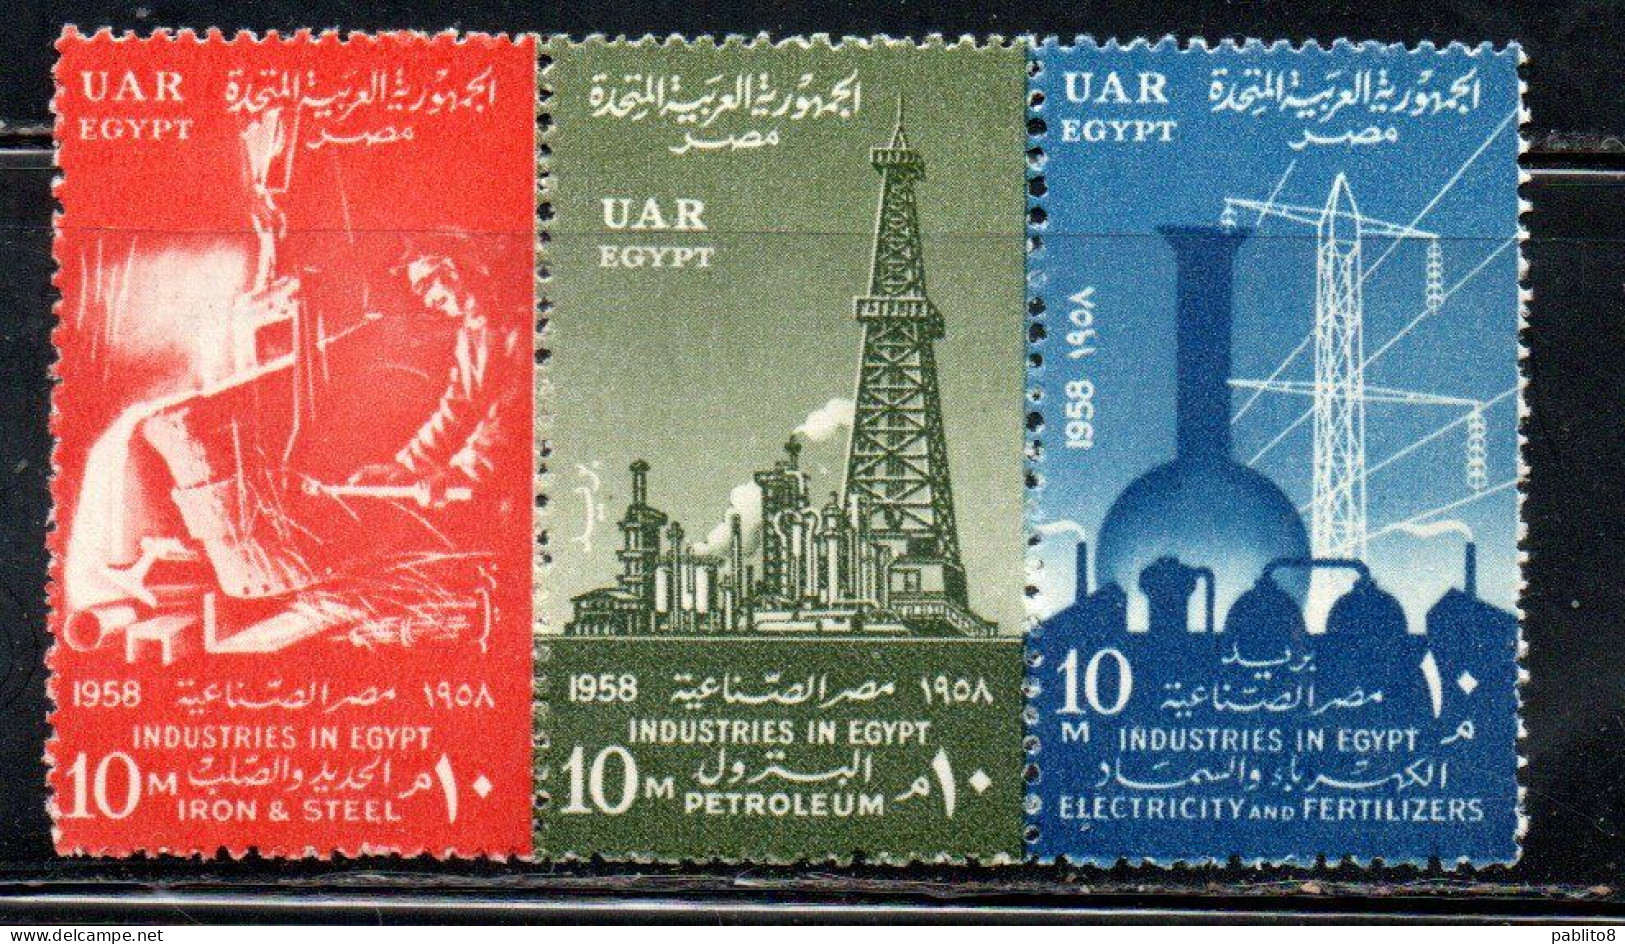 UAR EGYPT EGITTO 1958 INDUSTRIES IRON & STEEL + PETROLEUM OIL + ELECTRICITY AND FERTILIZERS INDUSTRY 10m  MNH - Ungebraucht